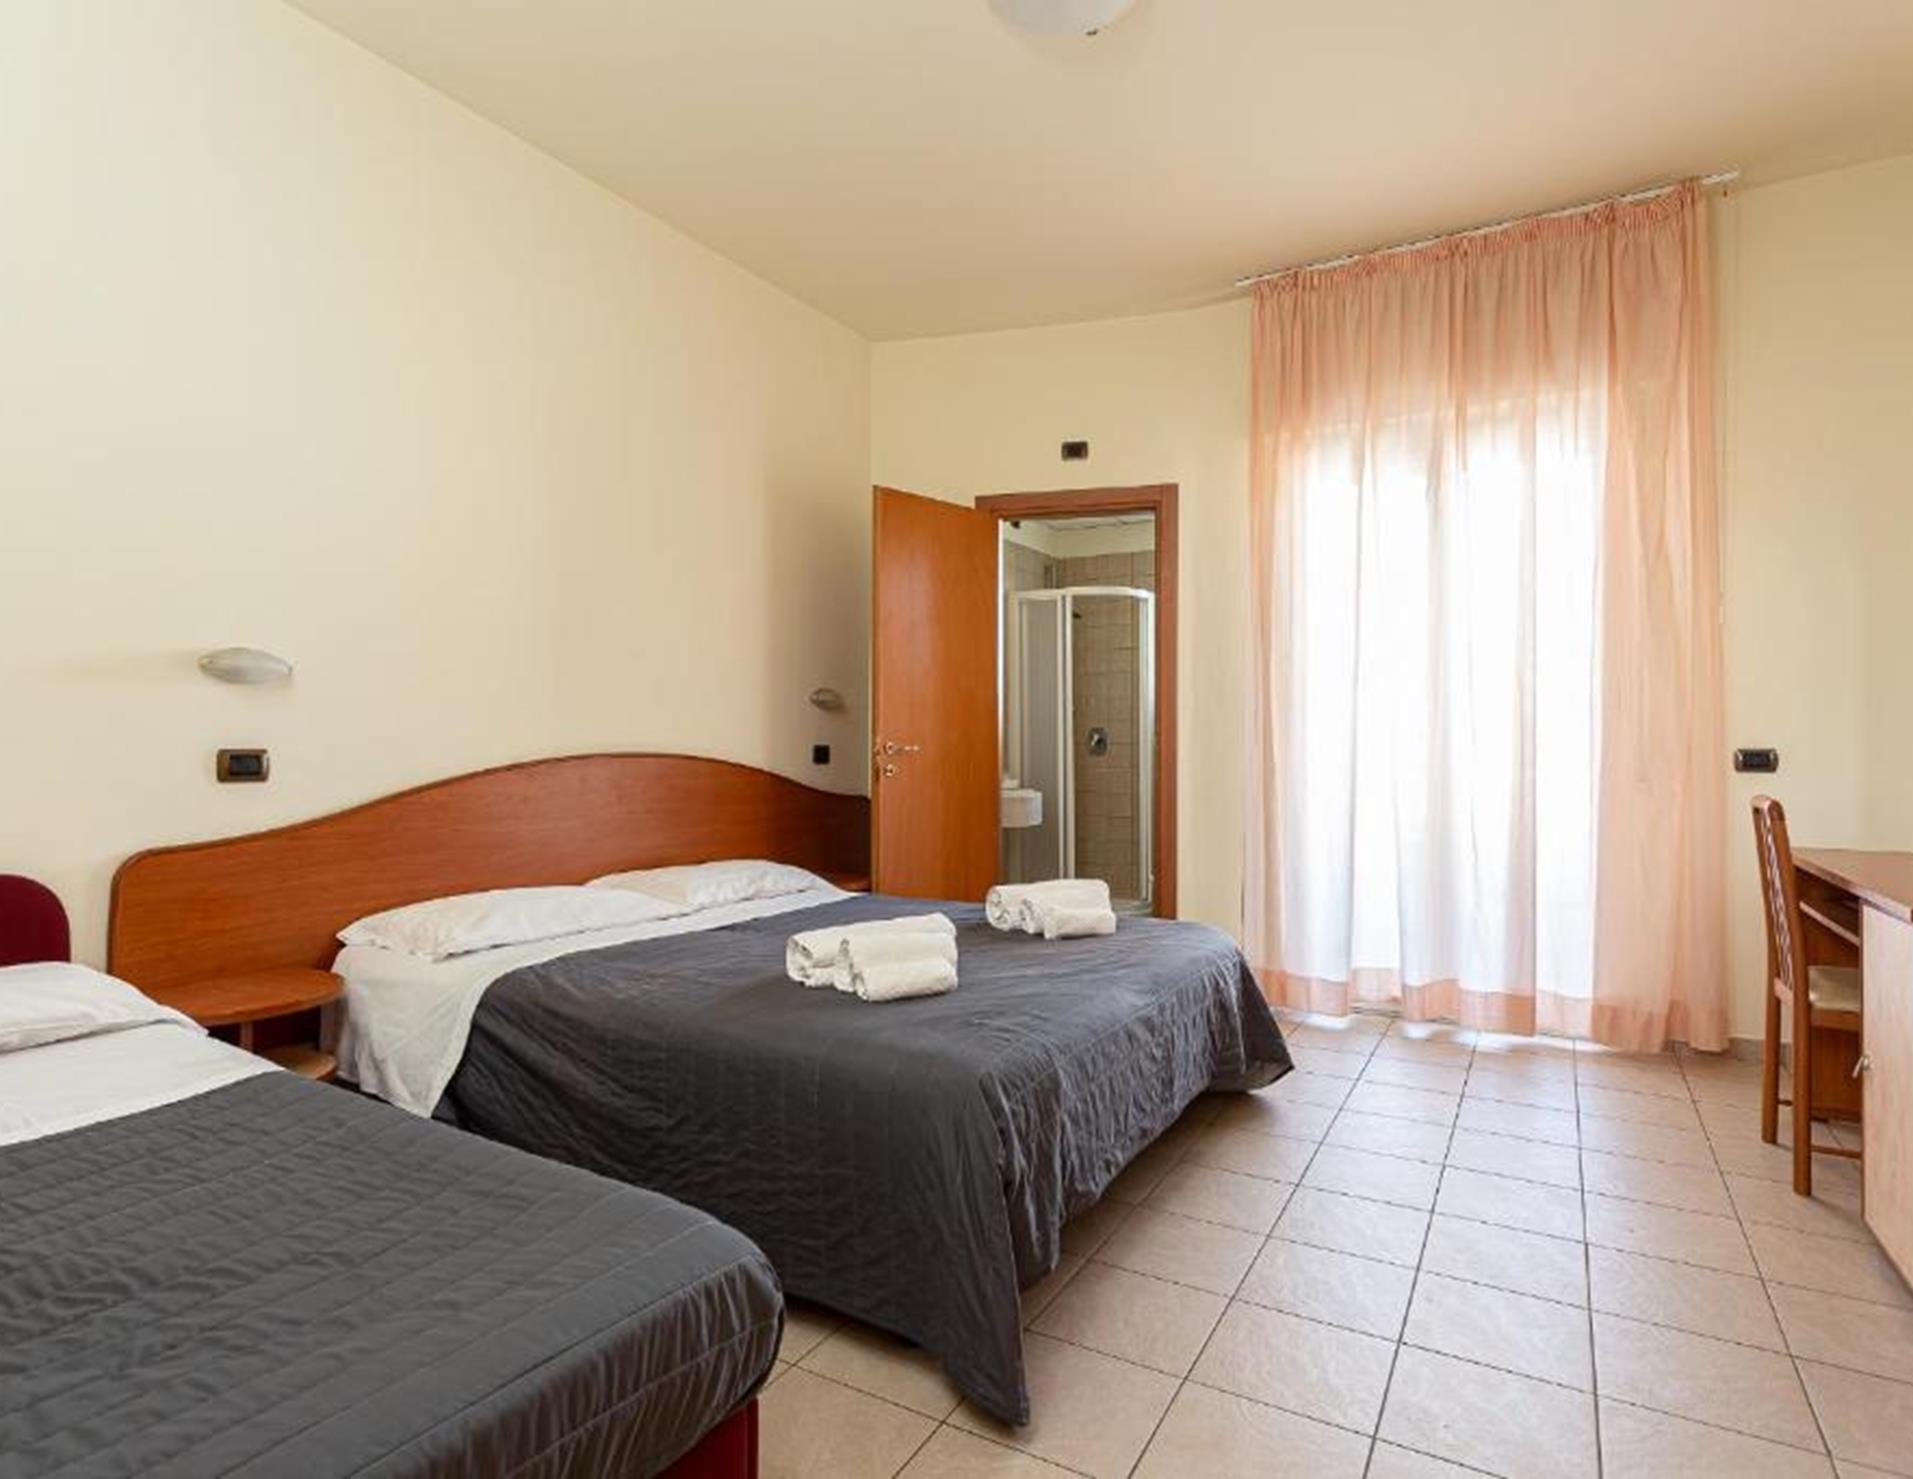 Hotel Villa Maria - Room 4